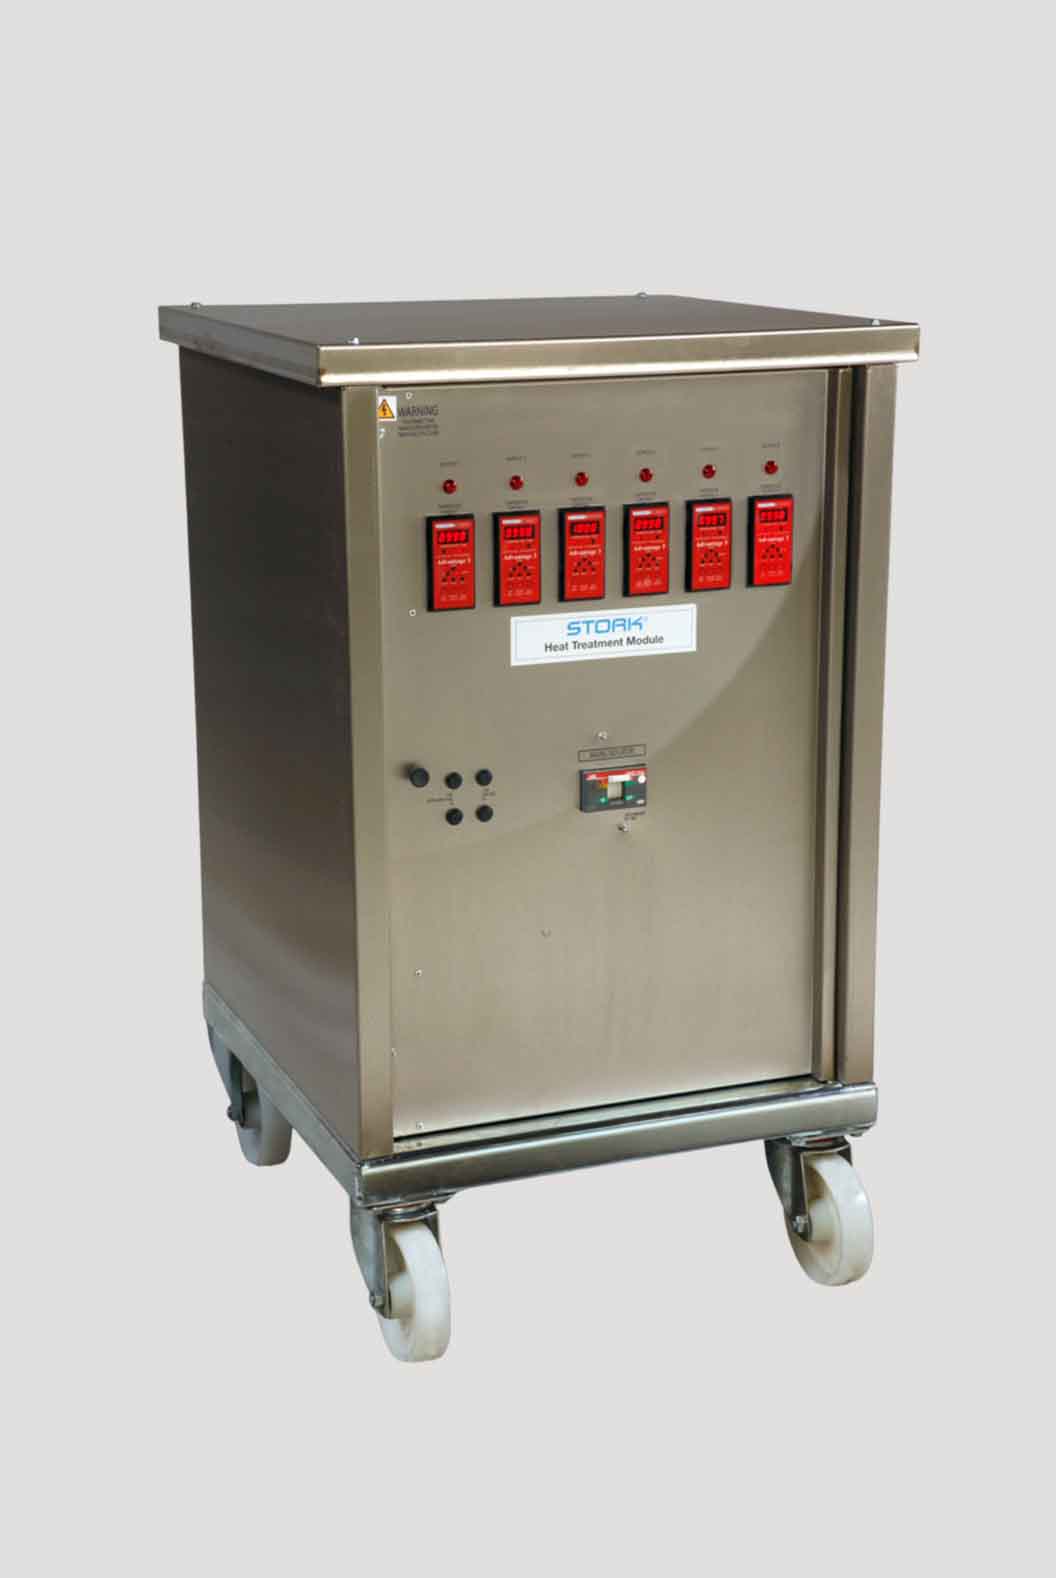 Heat treatment units